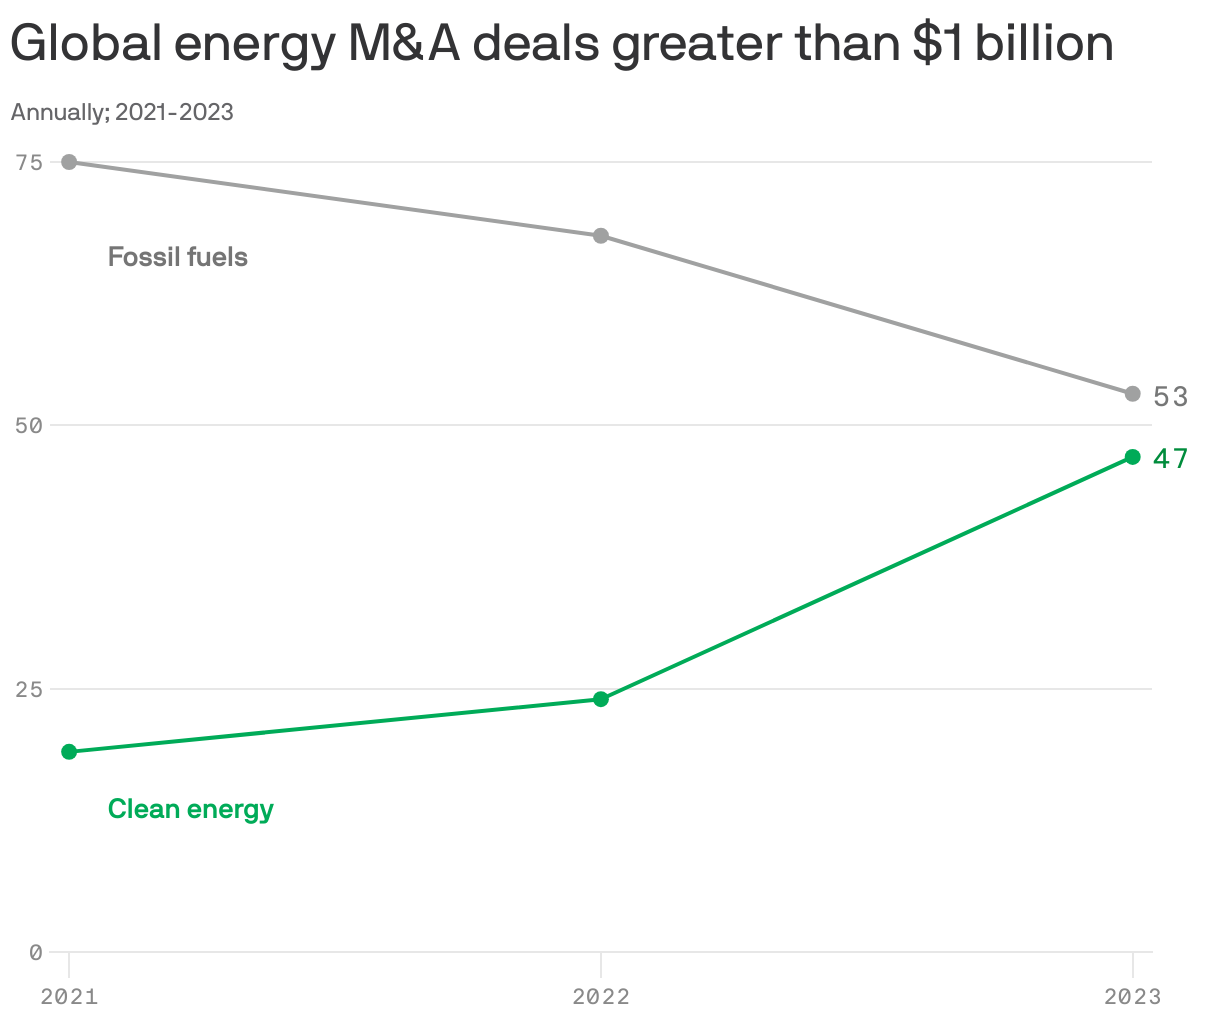 Global energy M&A deals greater than $1 billion